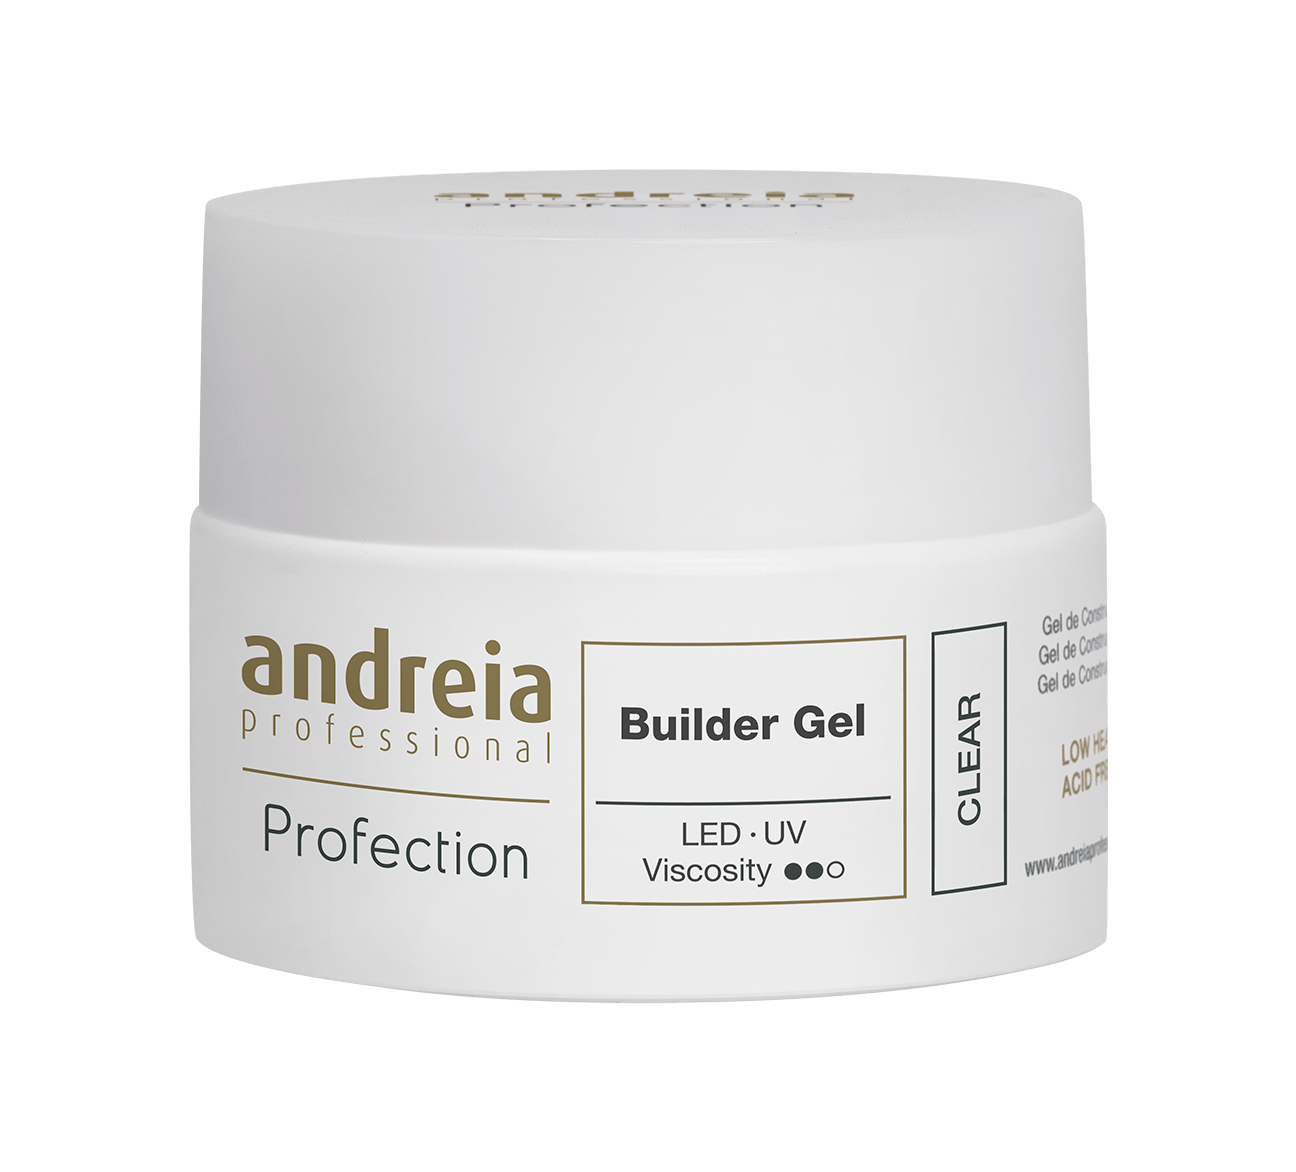 Andreia Professional Profection Builder Gel Clear 44g